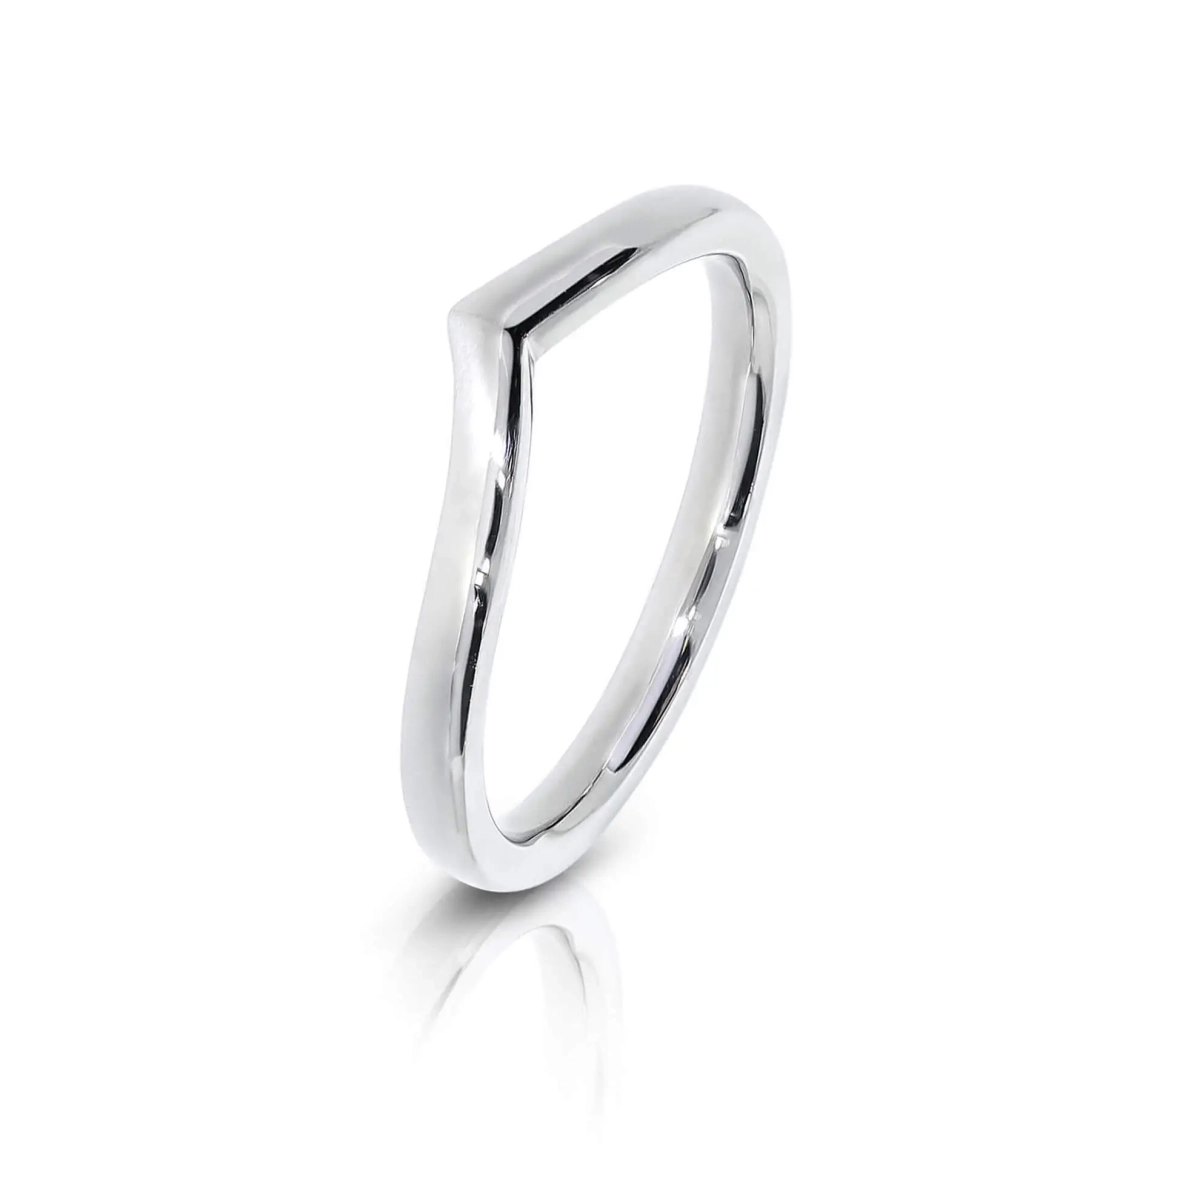 Wishbone Shaped Wedding Ring